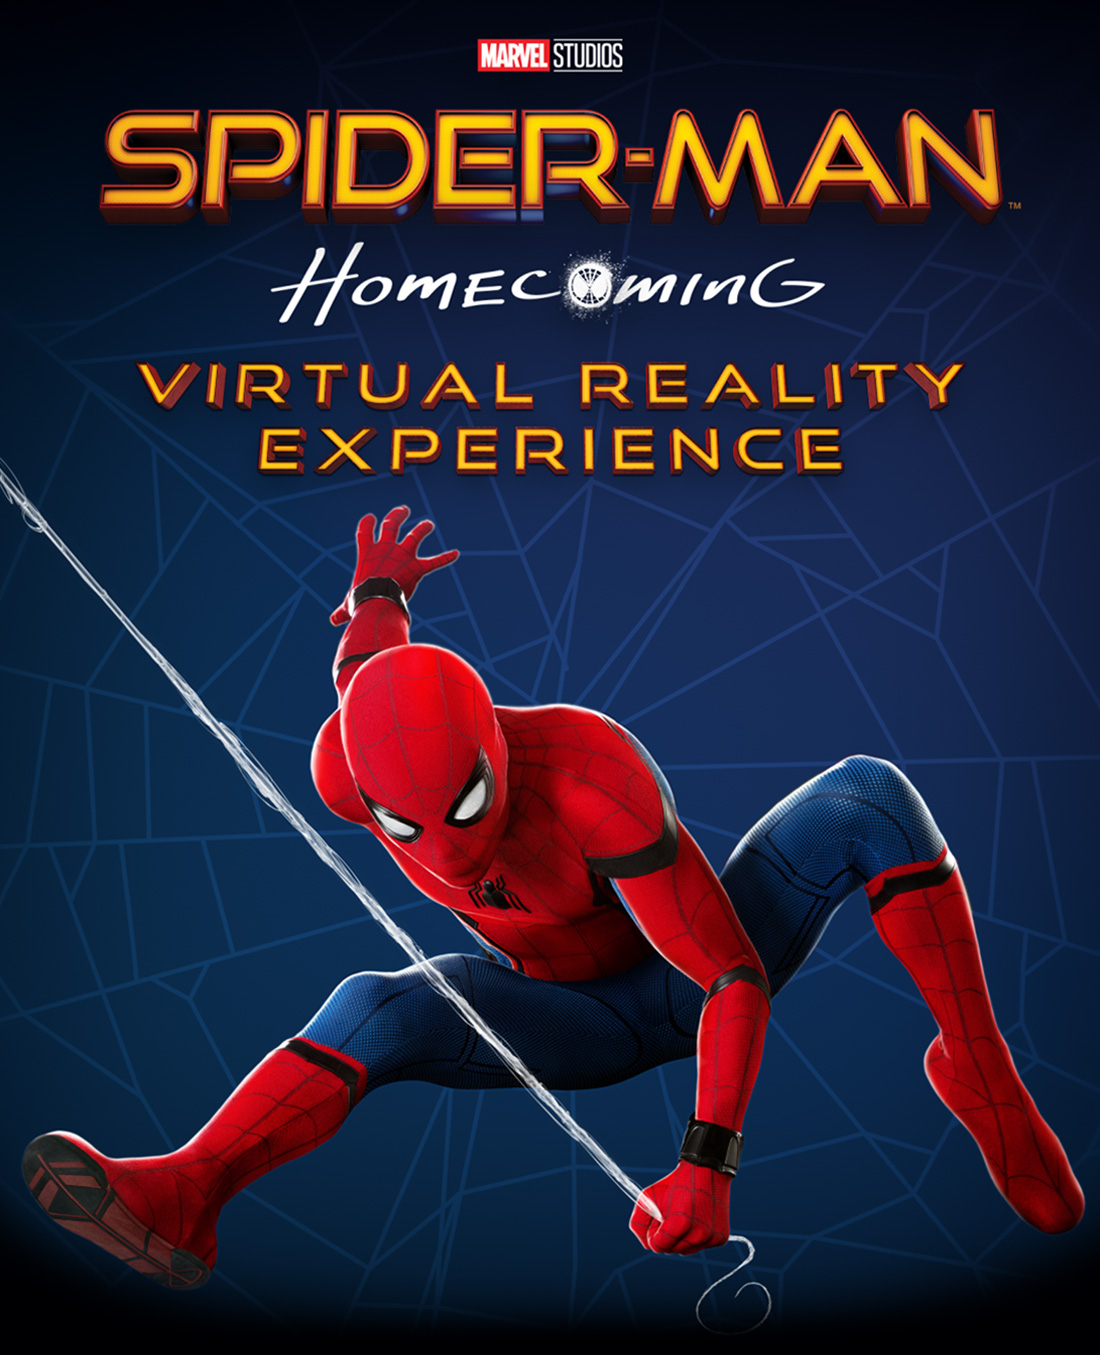 Vr пауки. Spider-man: Homecoming VR. Spider-man VR Homecoming игра 2017. Spider-man: Homecoming - Virtual reality experience. Spider man Homecoming обложка.